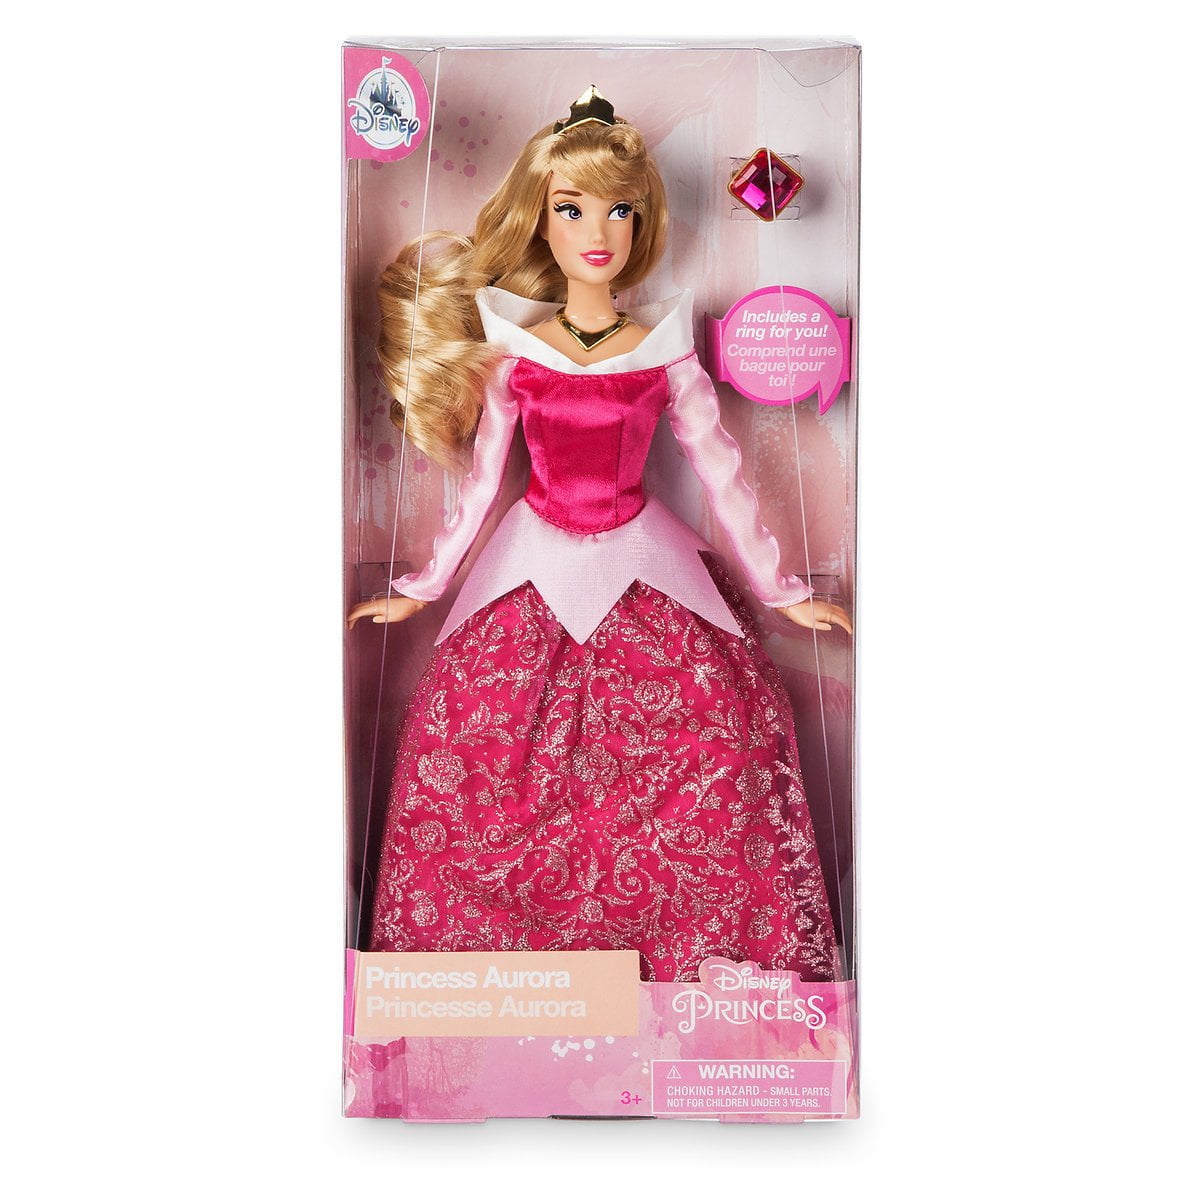 Disney Store Classics Princess Aurora Accessory Pack Doll Fashion Set 